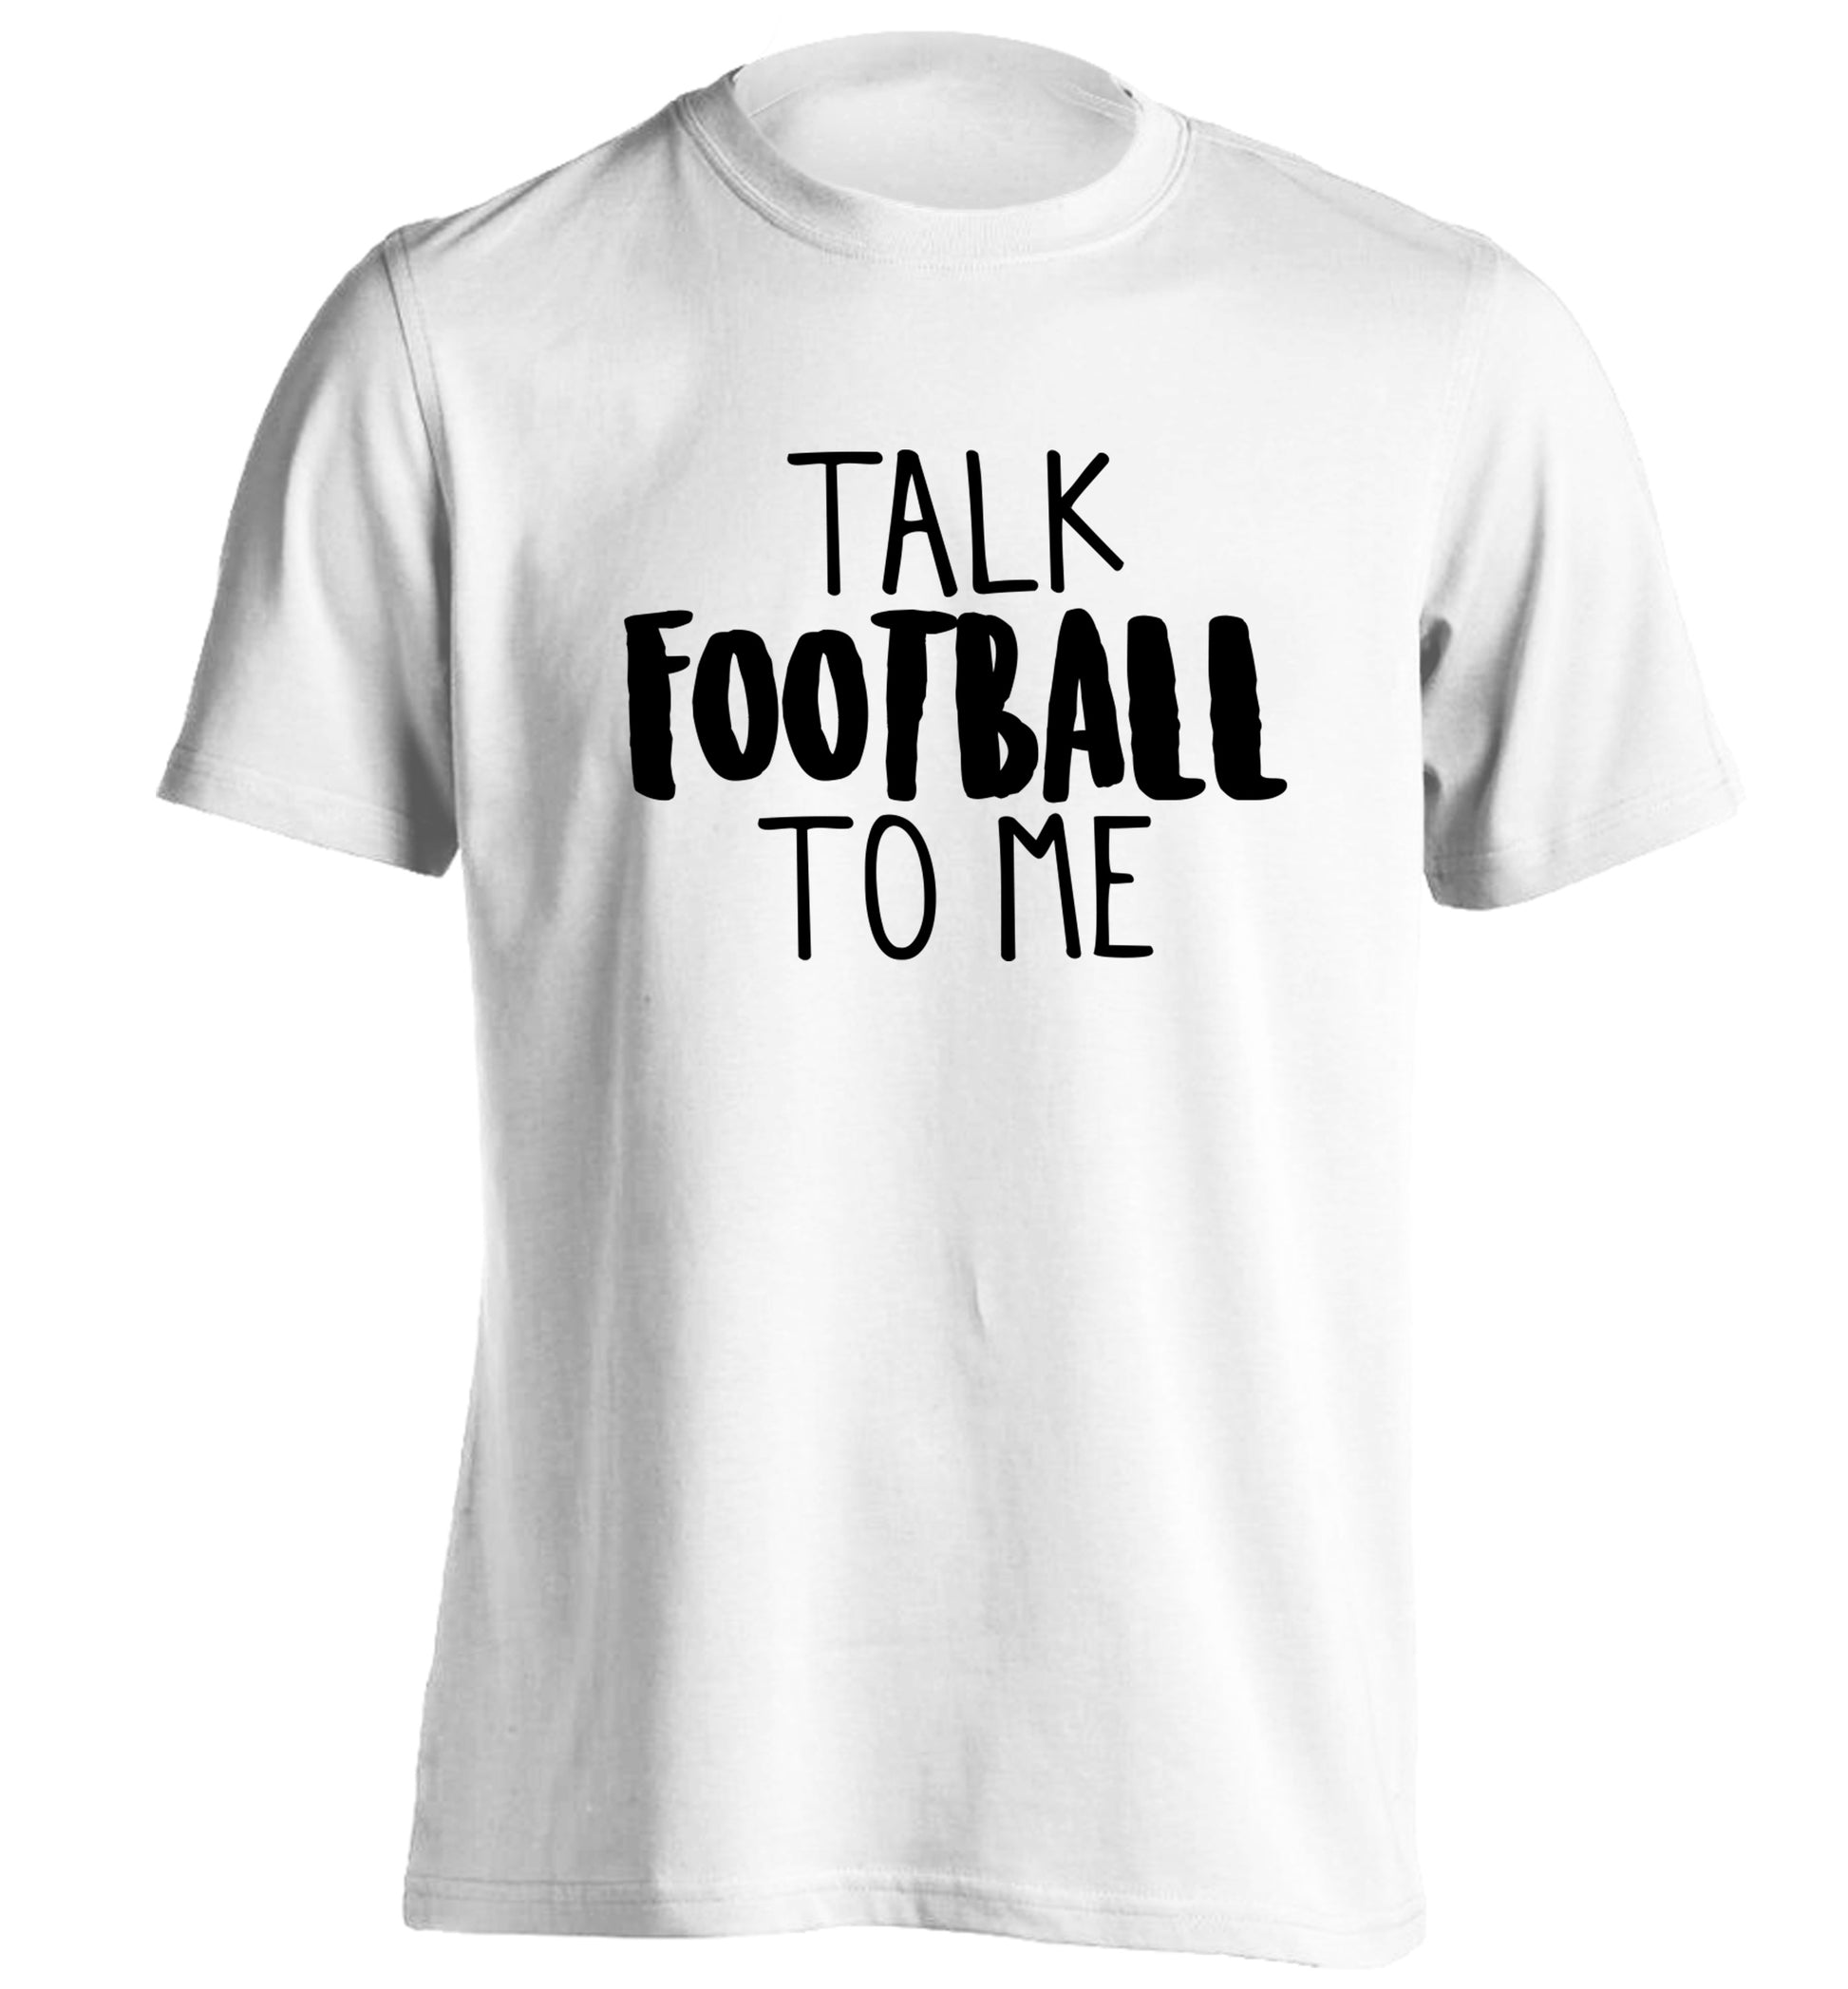 Talk football to me adults unisexwhite Tshirt 2XL